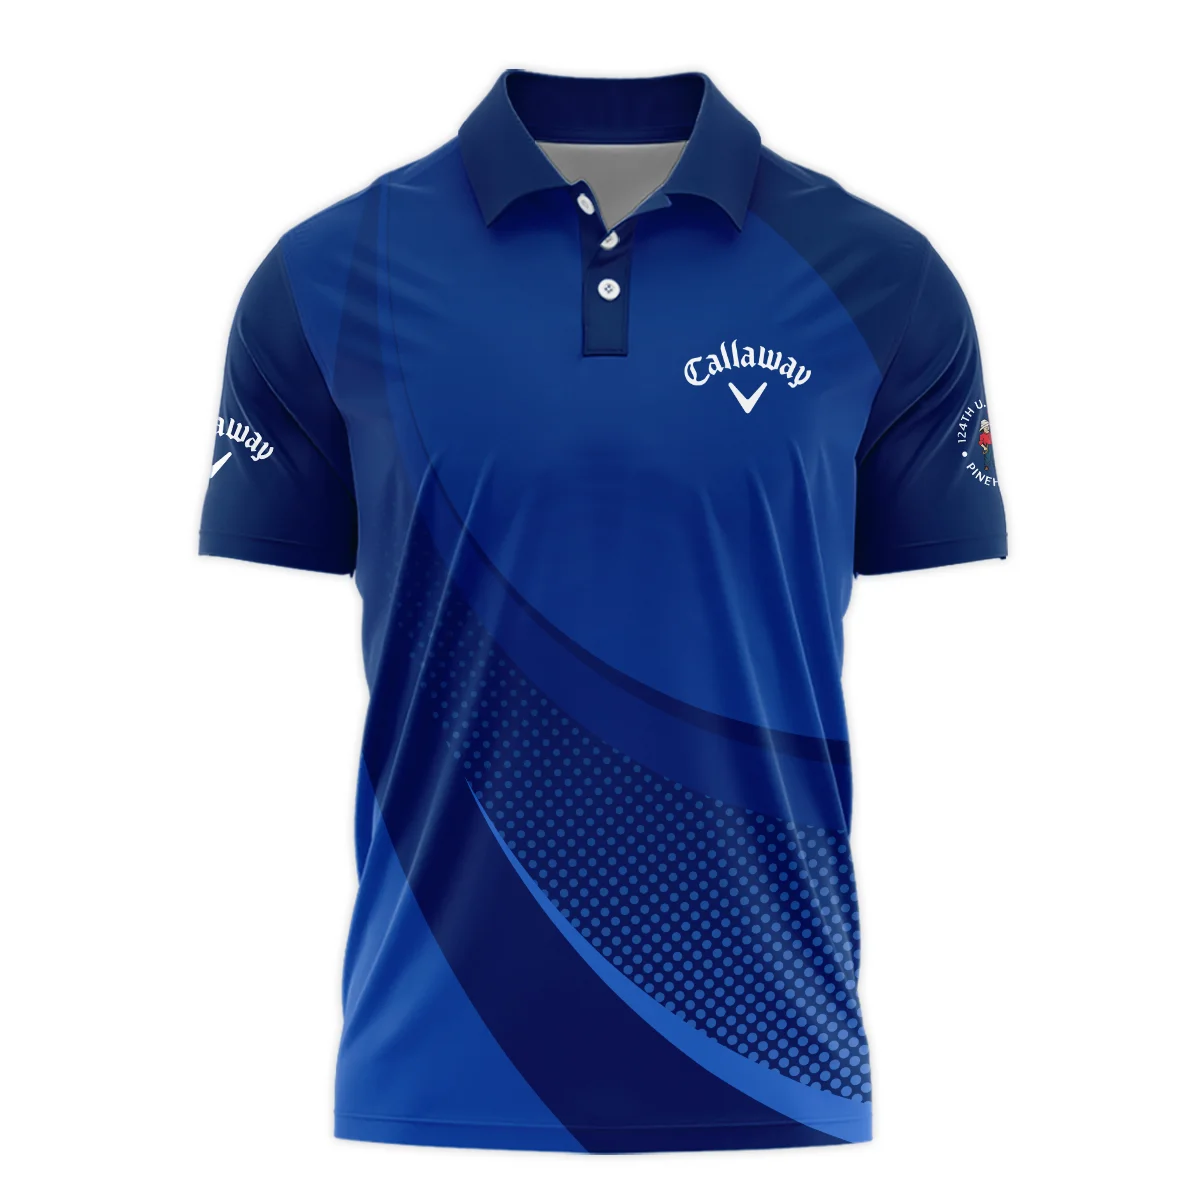 Callaway 124th U.S. Open Pinehurst Golf Sport Unisex T-Shirt Dark Blue Gradient Halftone Pattern All Over Print T-Shirt